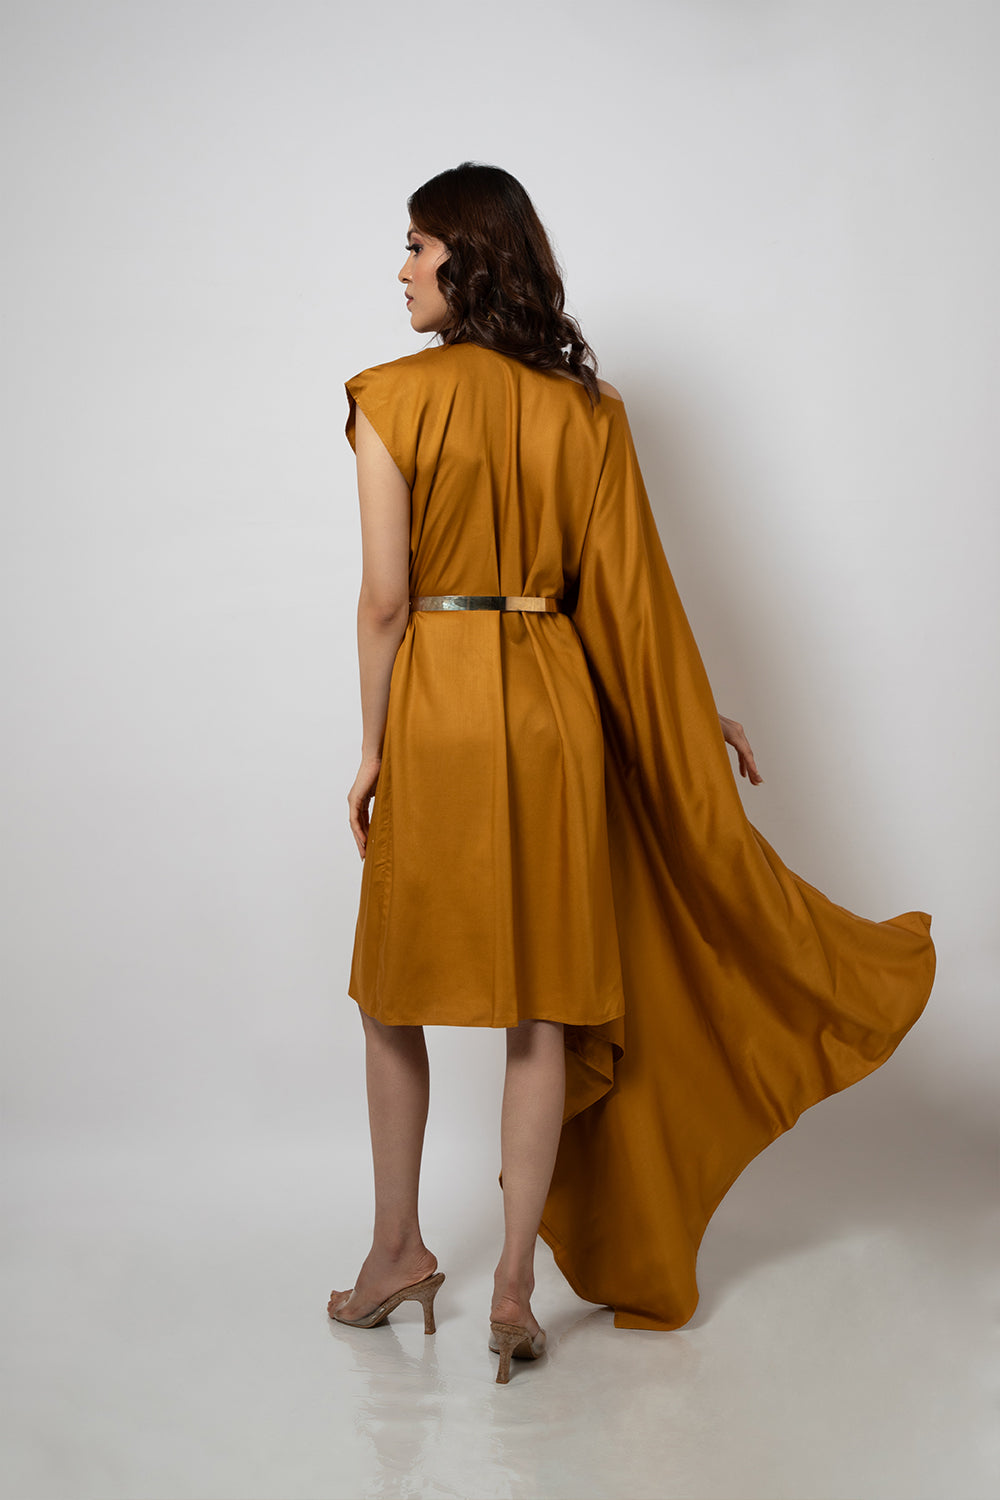 7. Asymmetrical mustard zero waste cotton blend dress